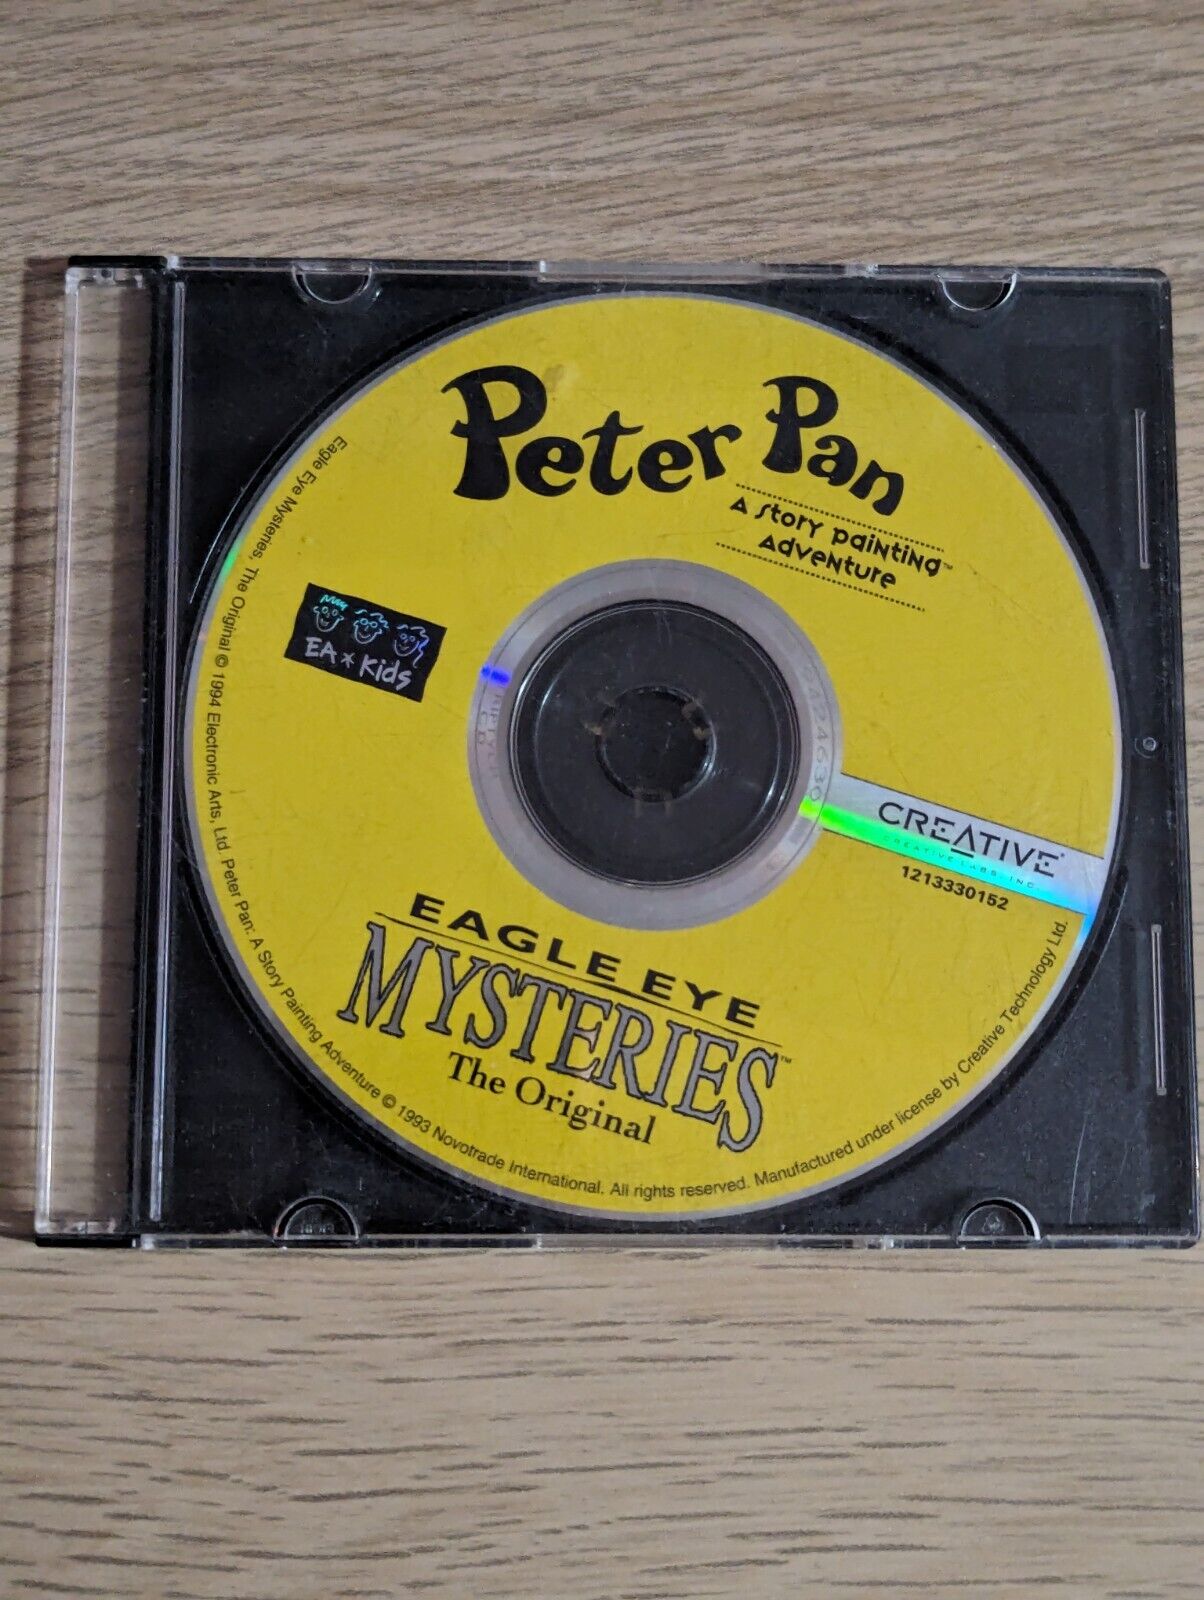 Peter Pan: A Story Painting Adventure Eagle Eye Mysteries Vintage CDROM 1993